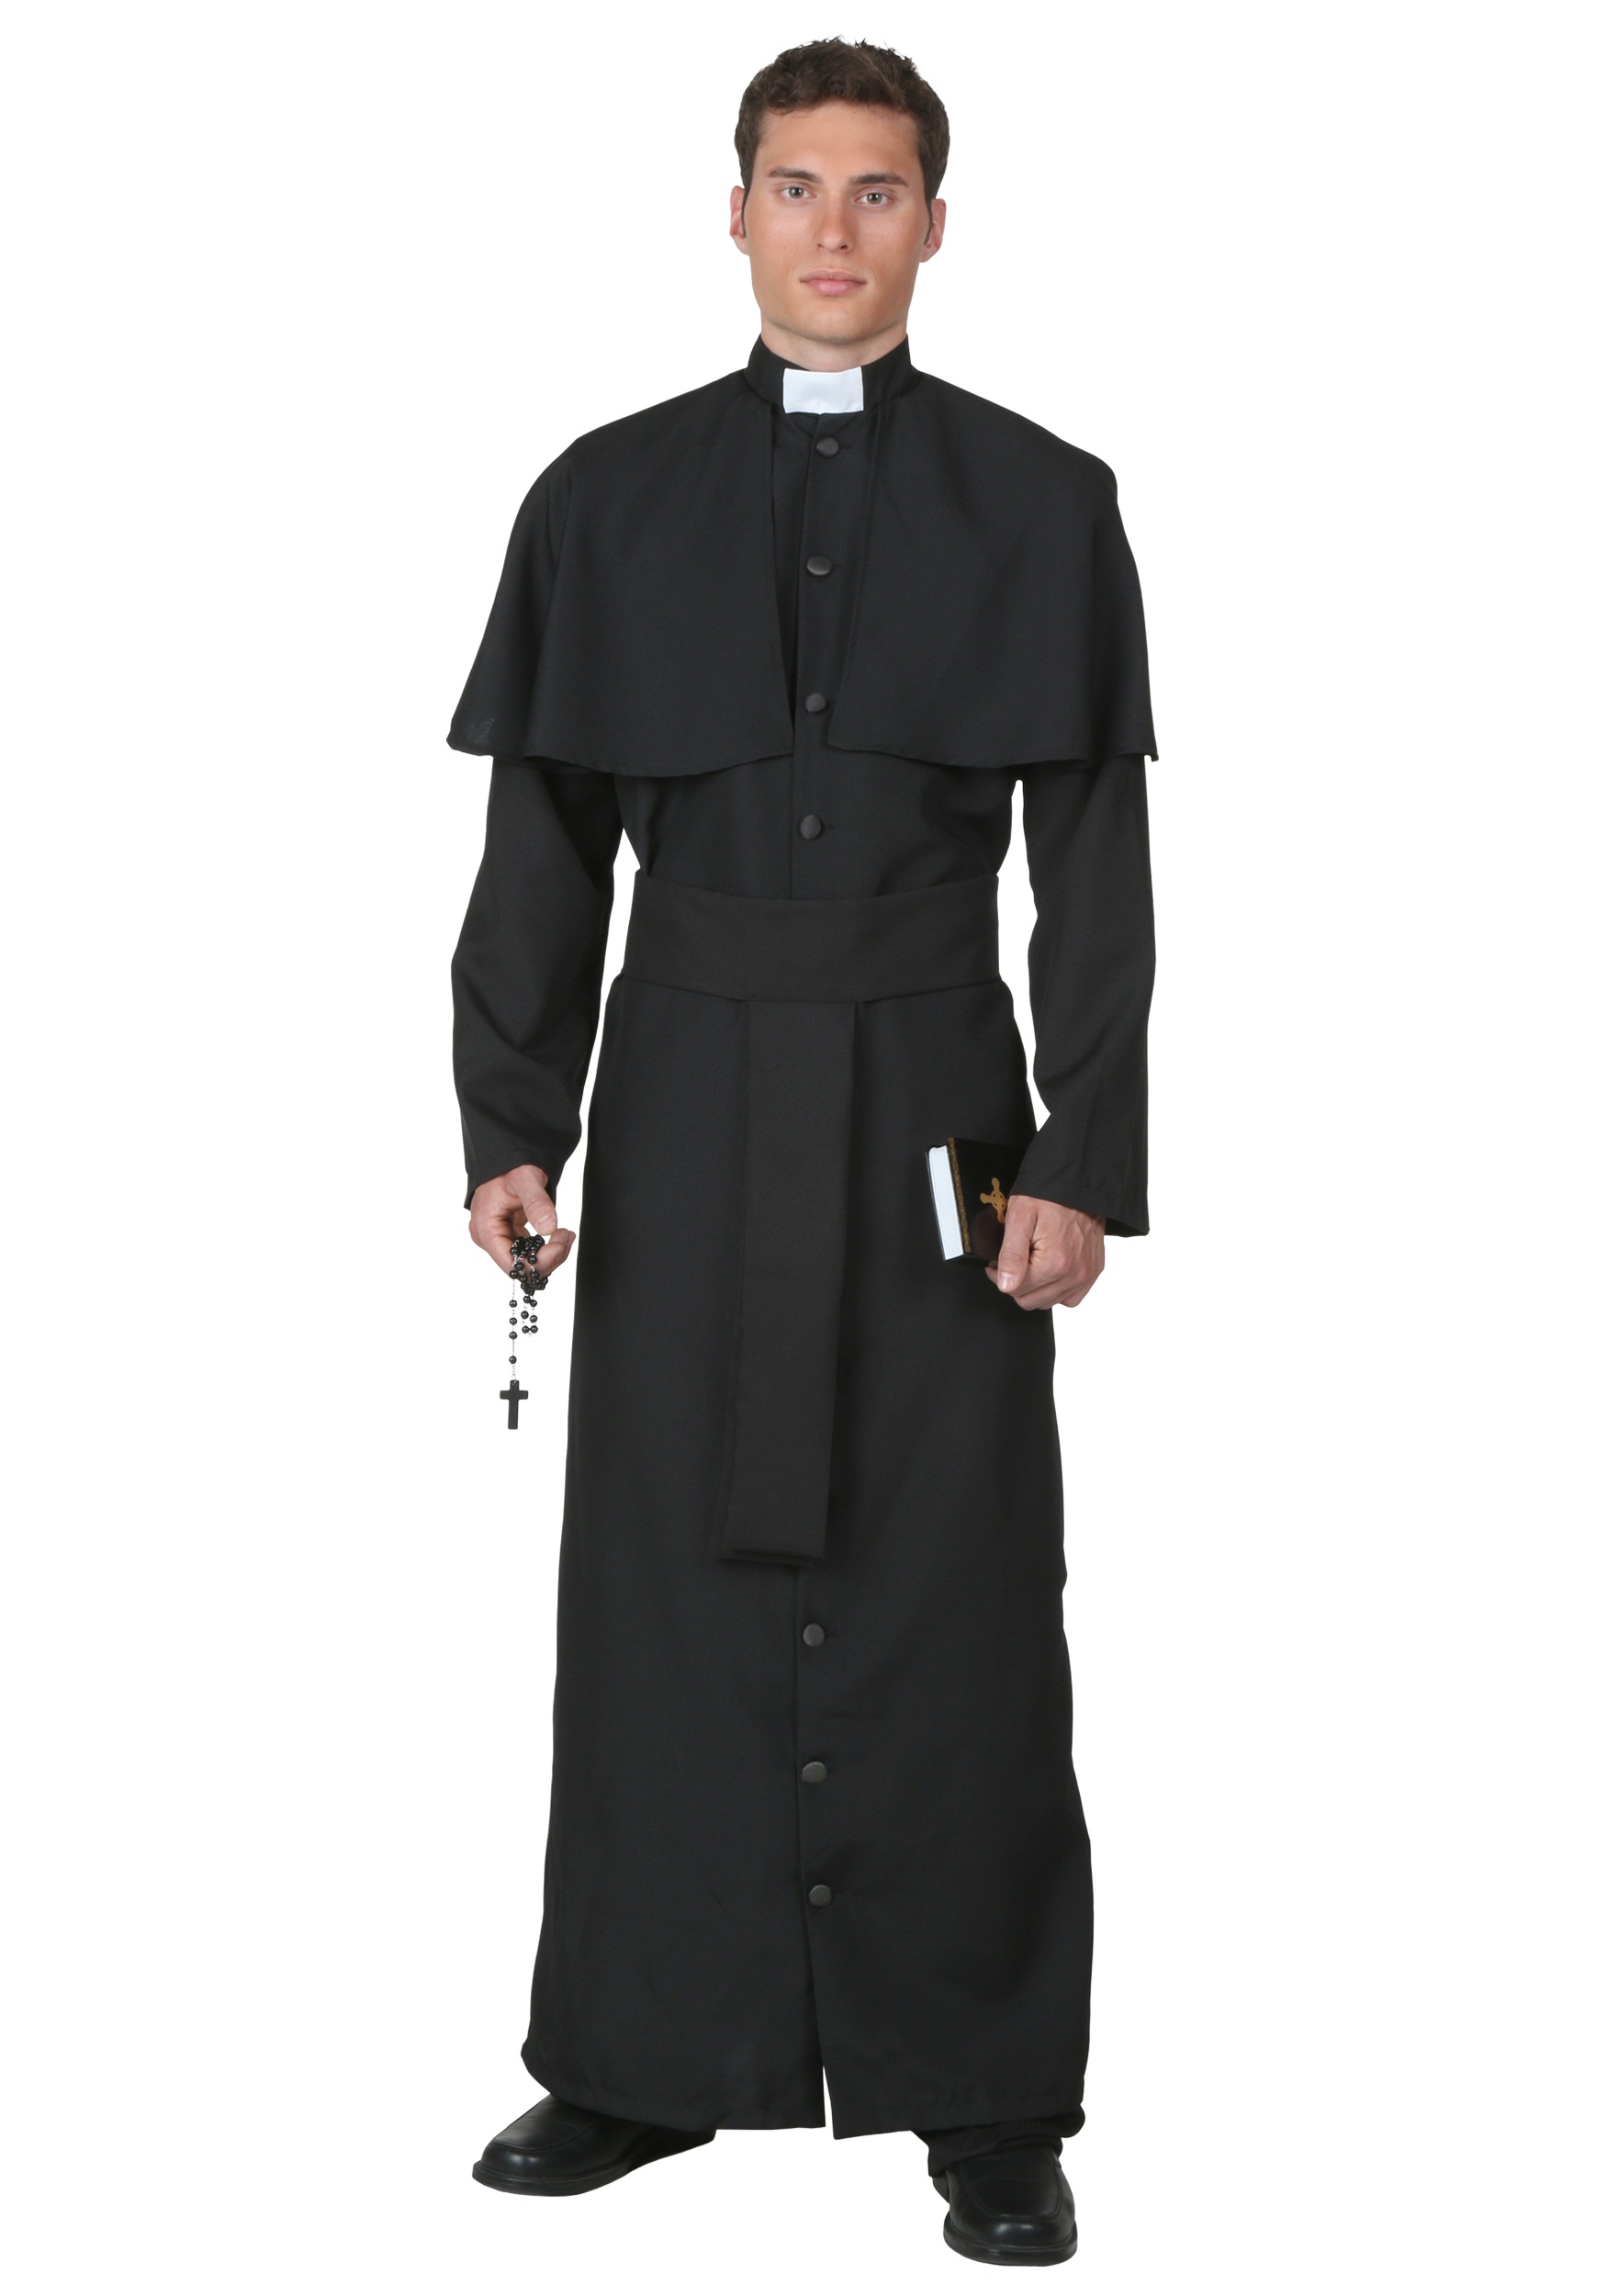 Photos - Fancy Dress Deluxe FUN Costumes  Priest Plus Size Costume for Men Black/White FUN29 